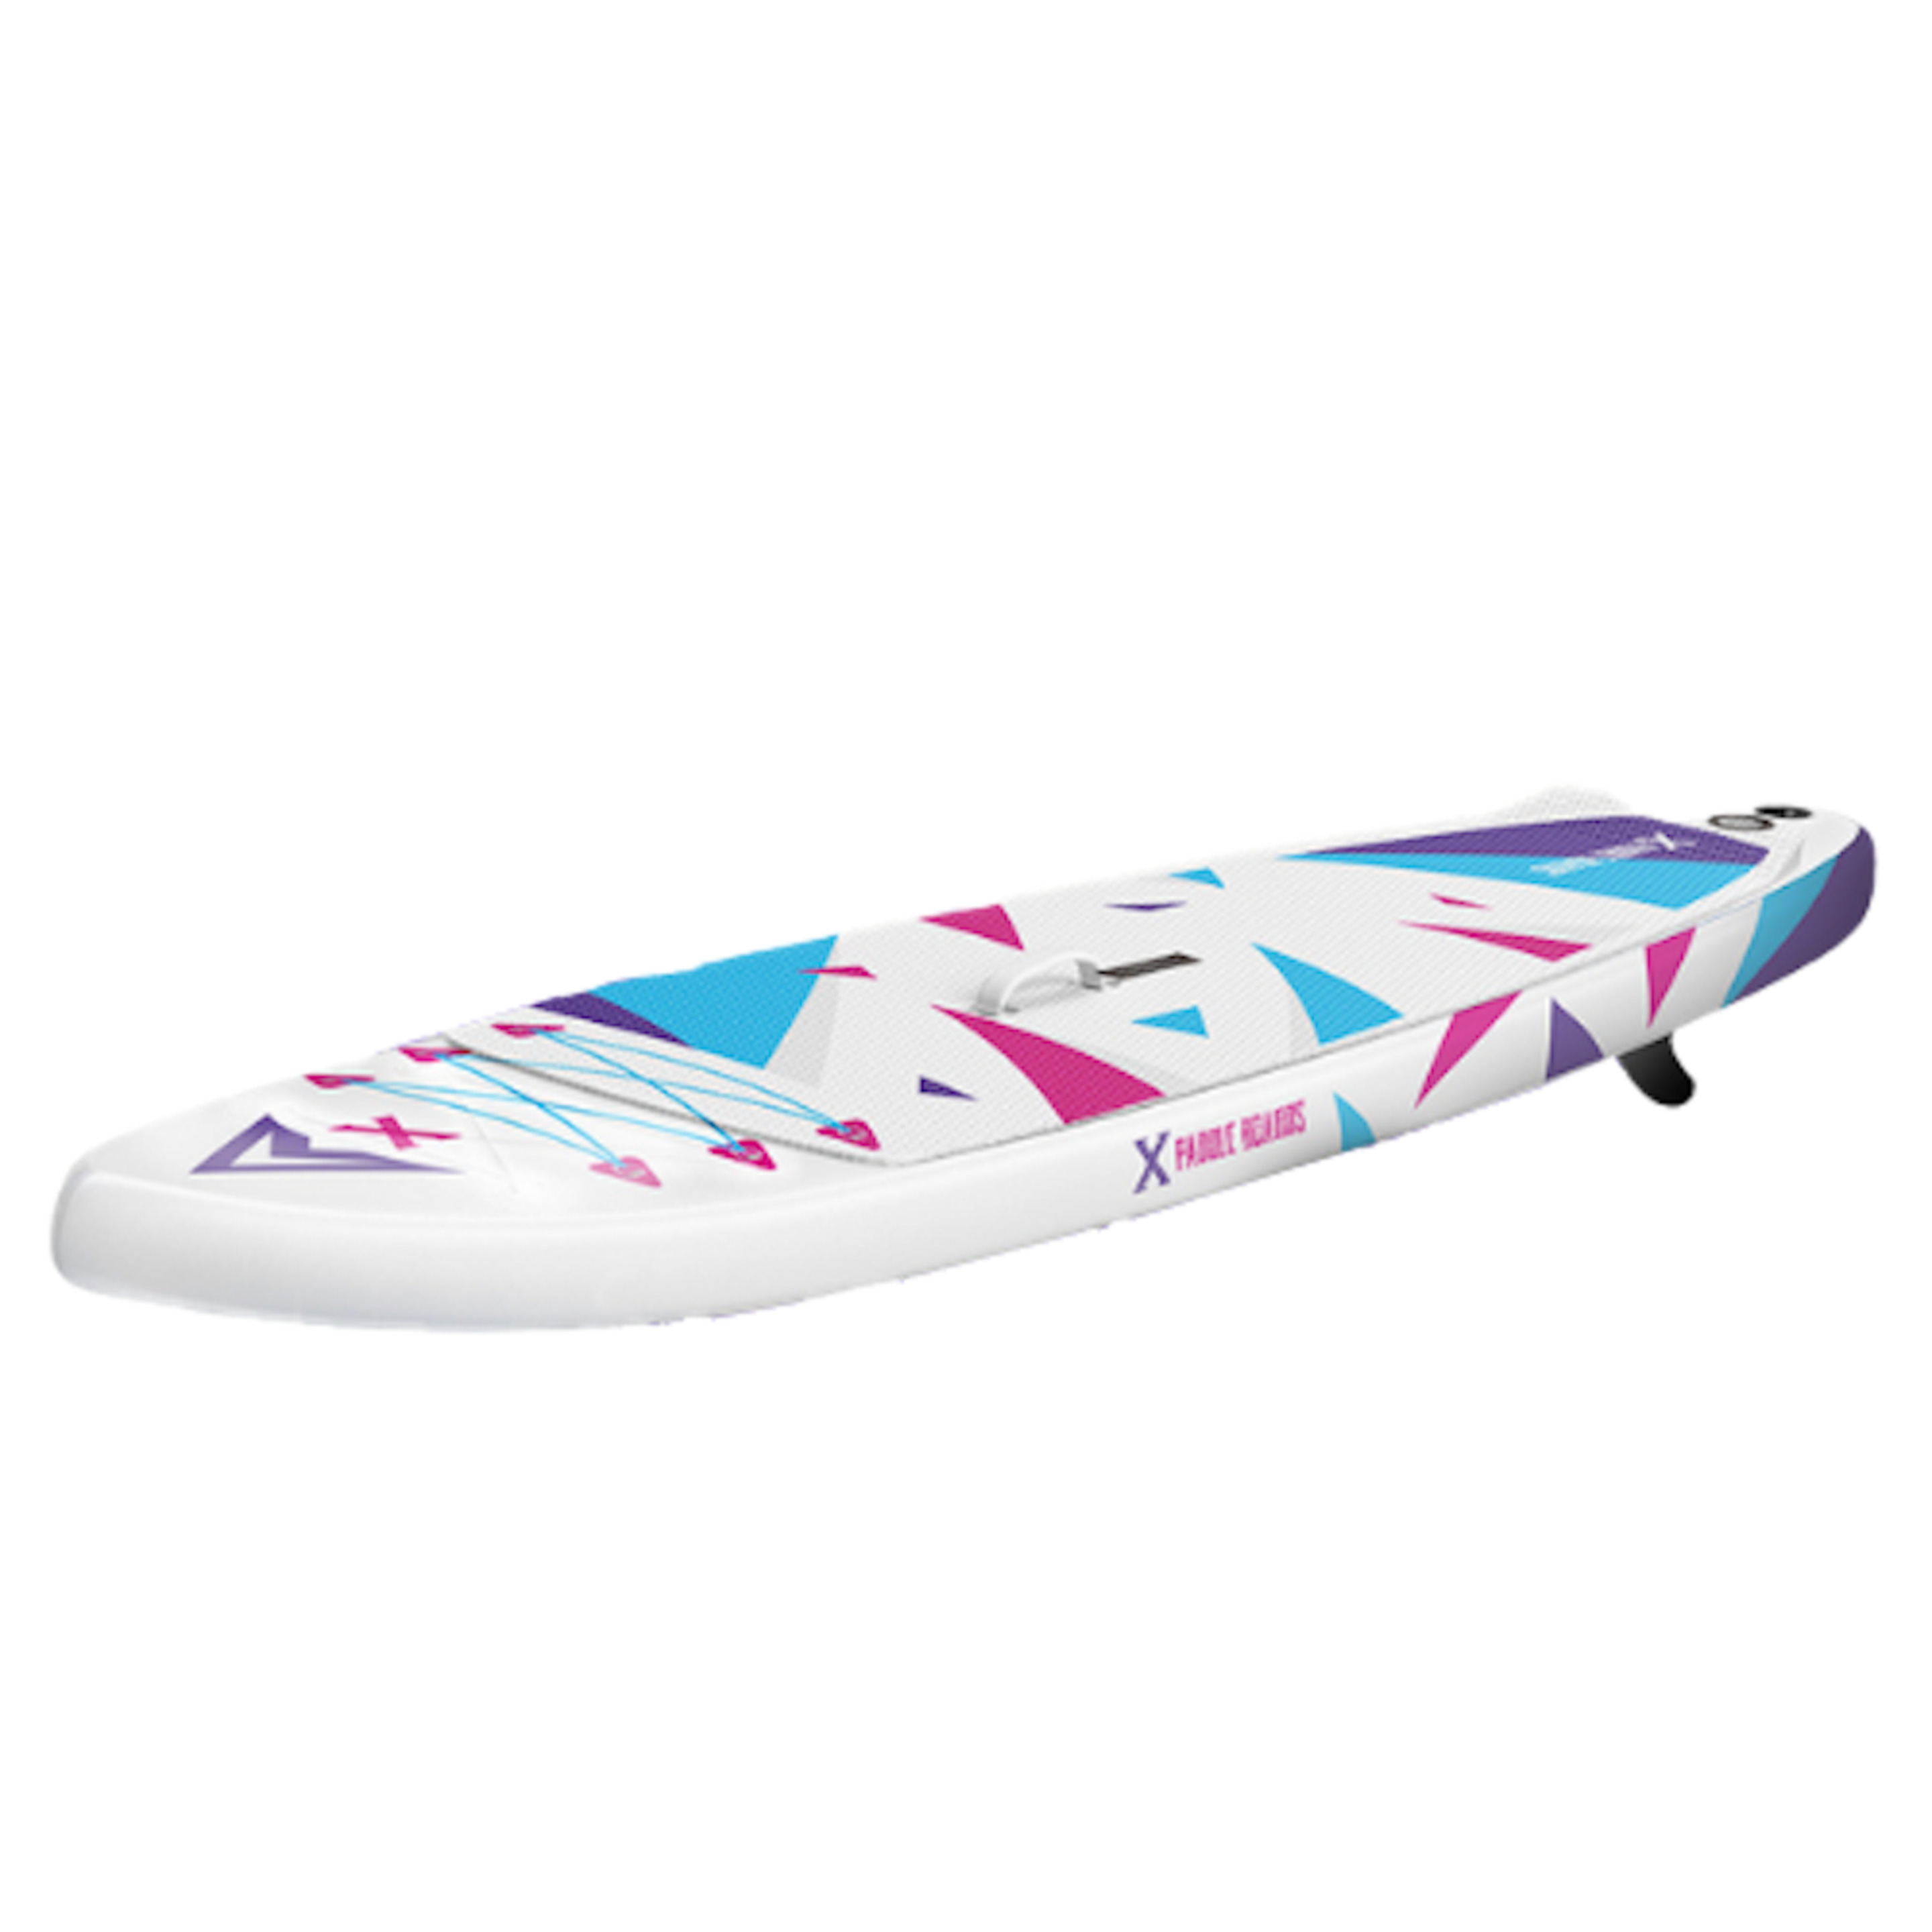 Tabla De Paddle Surf Hinchable  X-fun Kayak  320 X 82 X 15 Cm - Azul Claro/Rojo  MKP